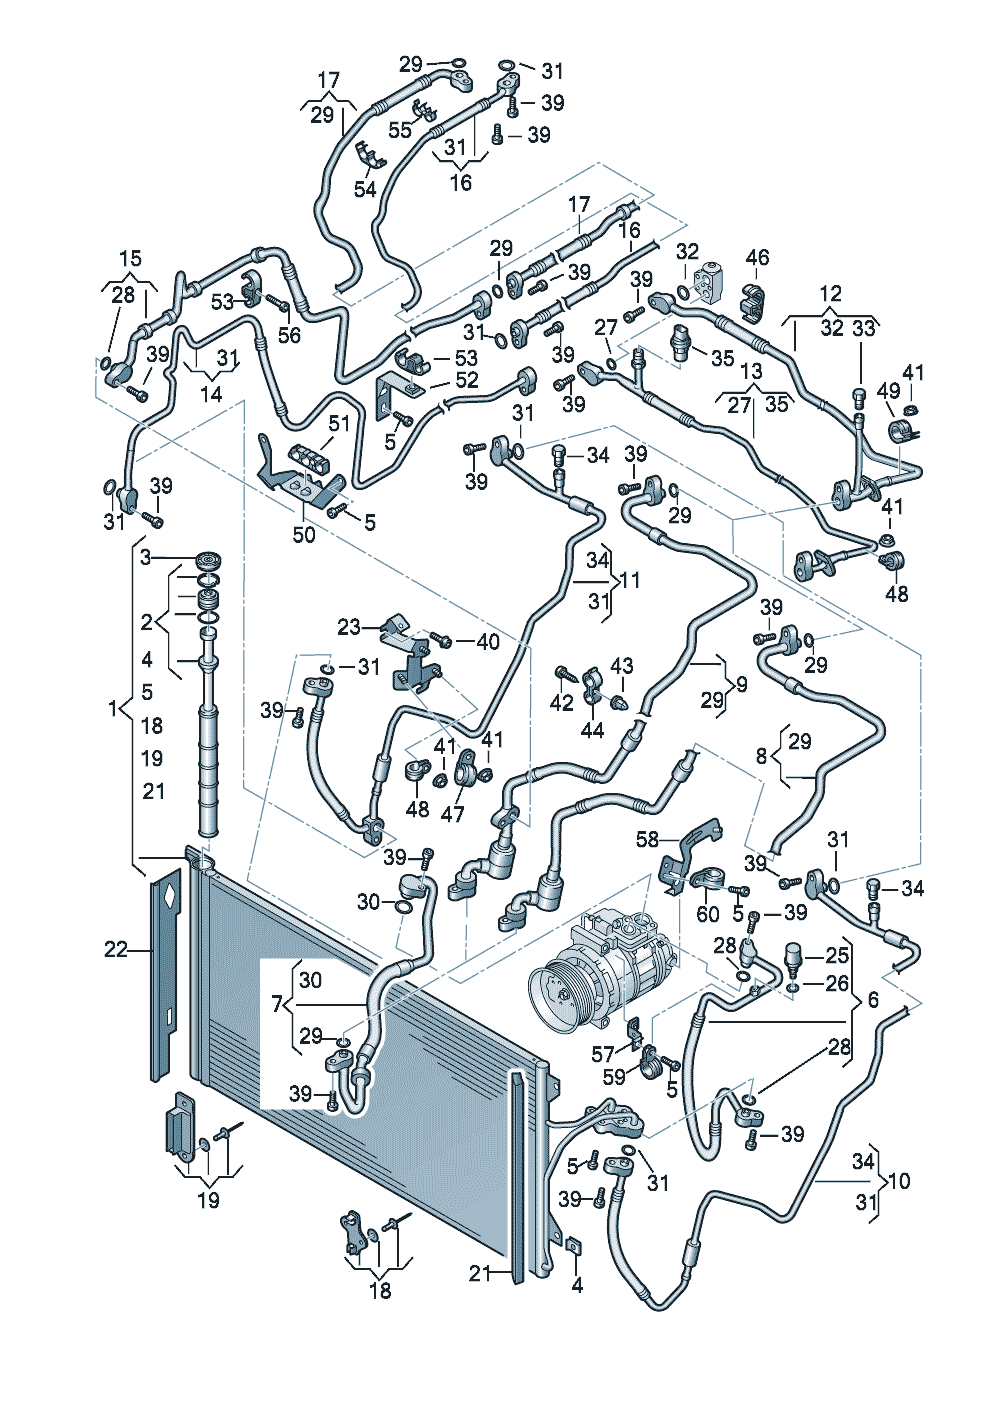 circuit de refrigerantCondenseur de climatiseur avec<br>reservoir de refrigerant 6,0l - Audi Q7 - aq7